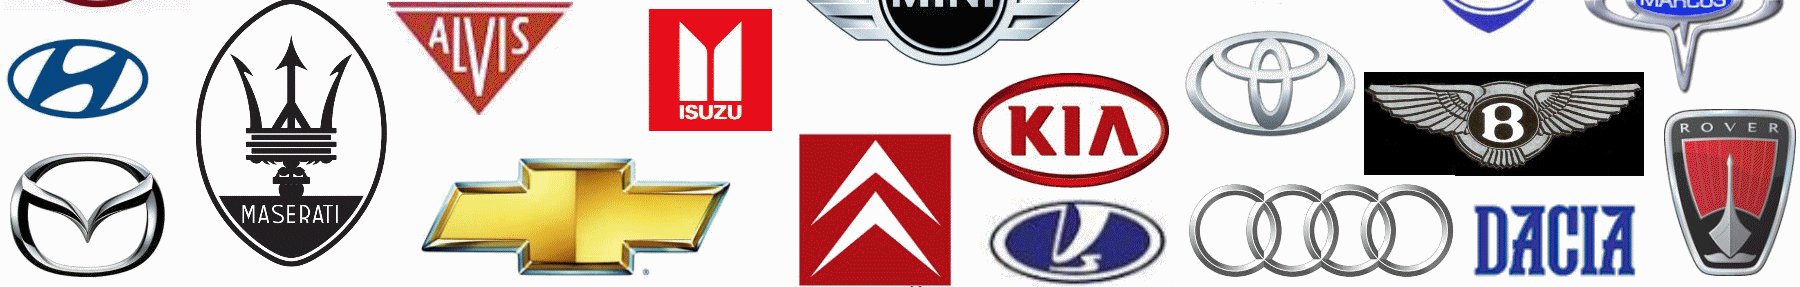 M Auto Sales Logo - M AUTO SALES – 8558 NEW LAREDO HIGHWAY SAN ANTONIO TX,78211